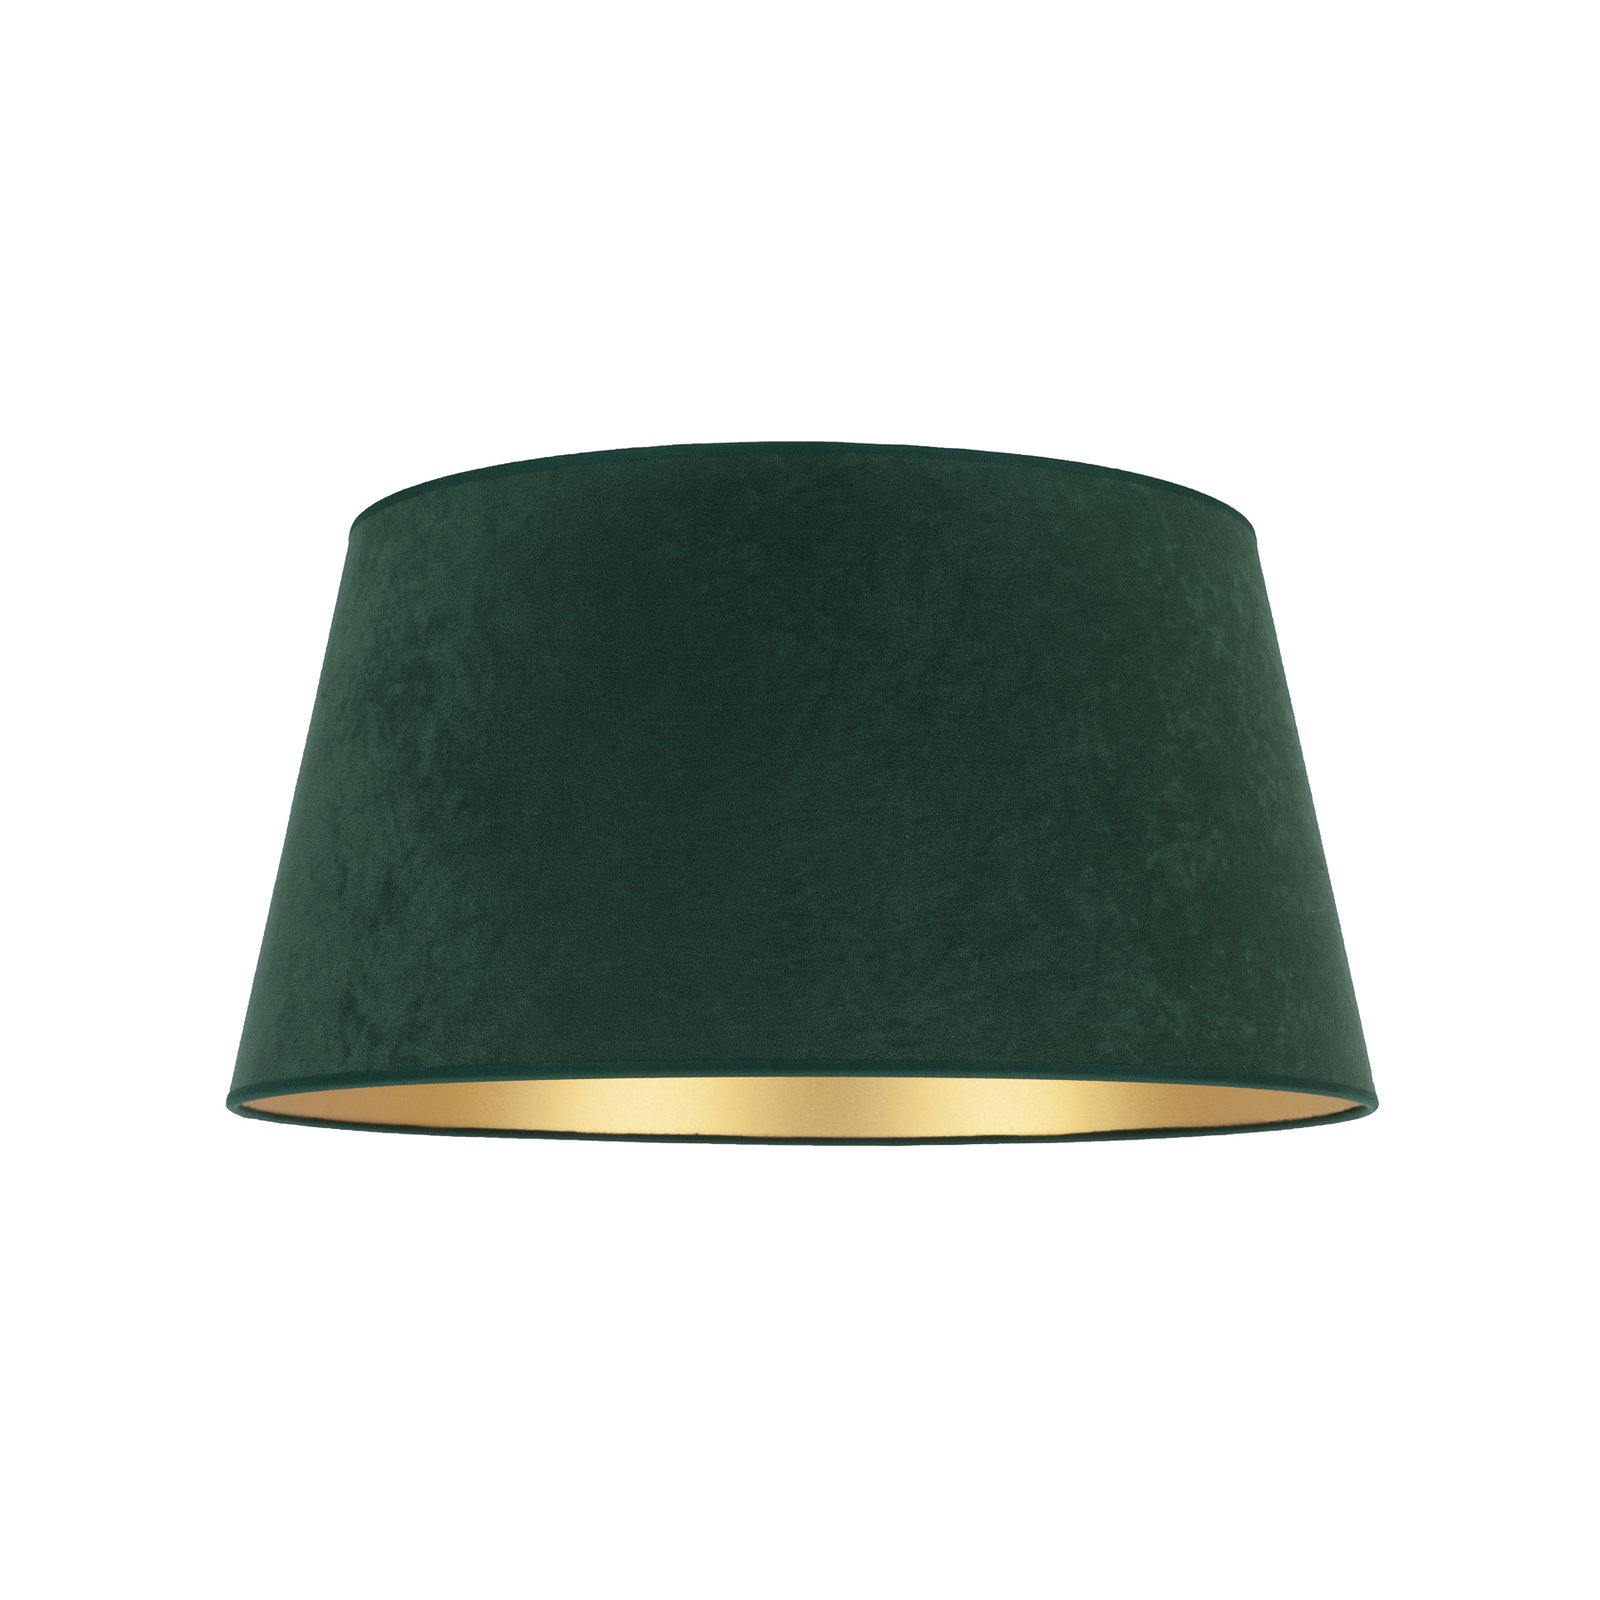 Cone lampshade height 22.5 cm, dark green/gold